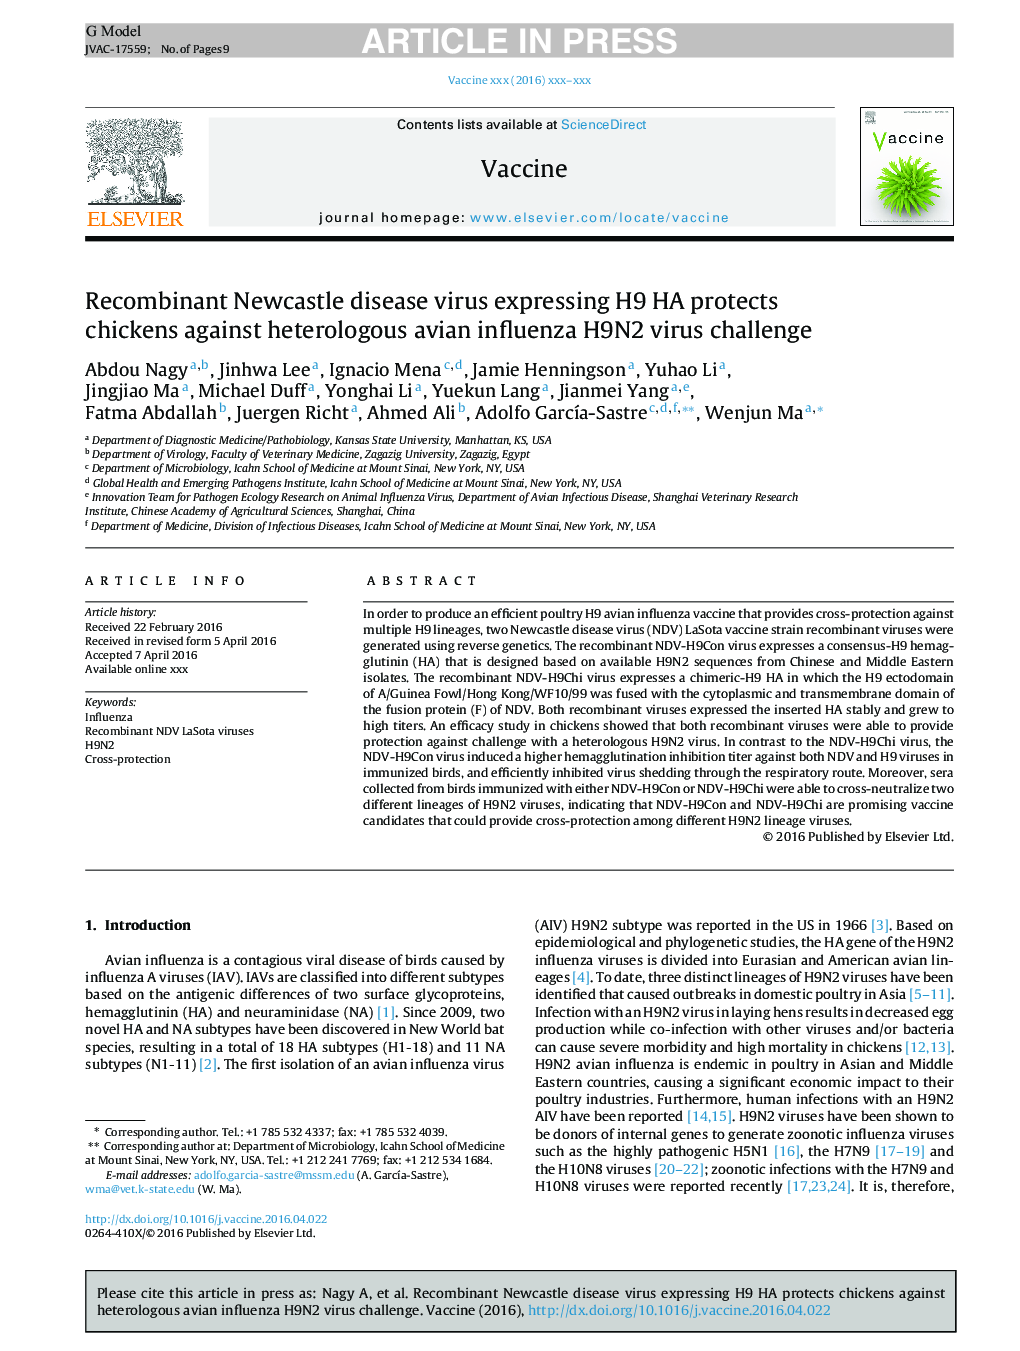 Recombinant Newcastle disease virus expressing H9 HA protects chickens against heterologous avian influenza H9N2 virus challenge